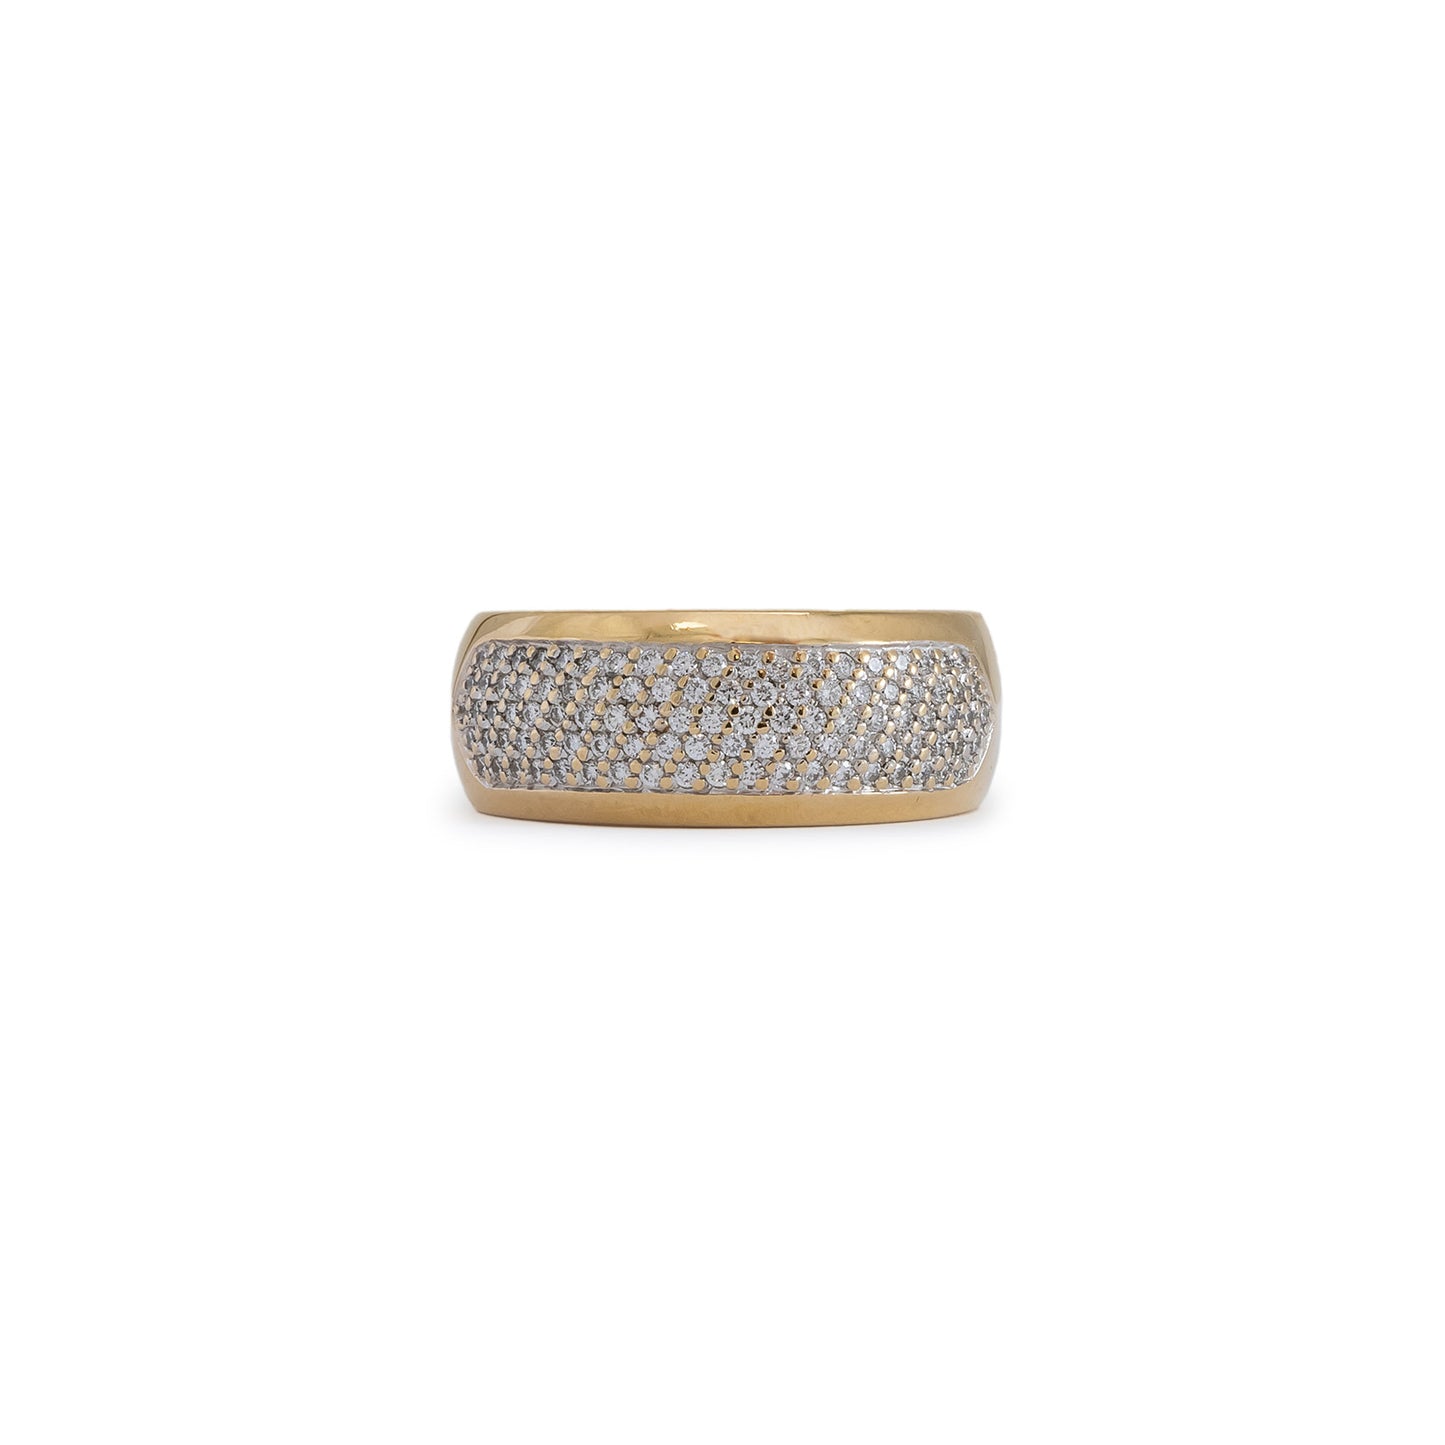 Diamond pave band ring 585 14K yellow gold Christian women's jewelry diamond ring women's ring